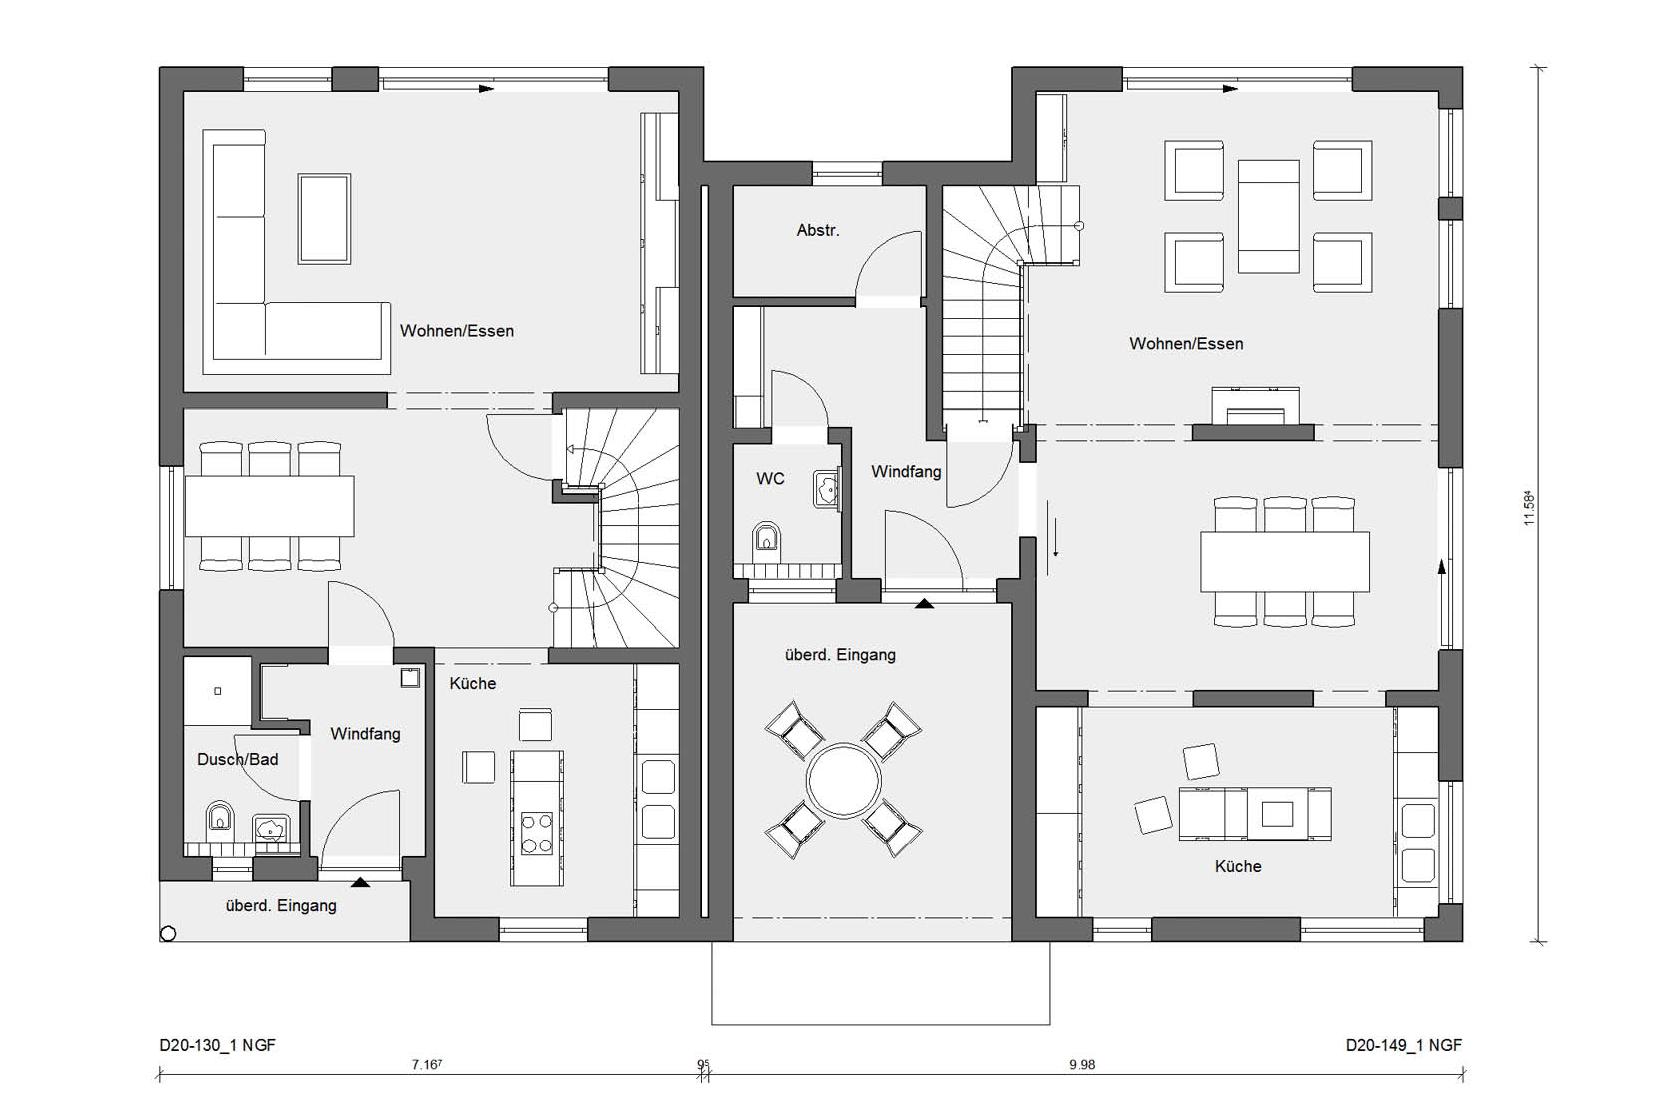 Floor plan ground floor D 20-130.1 / D 20-149.1 penthouse